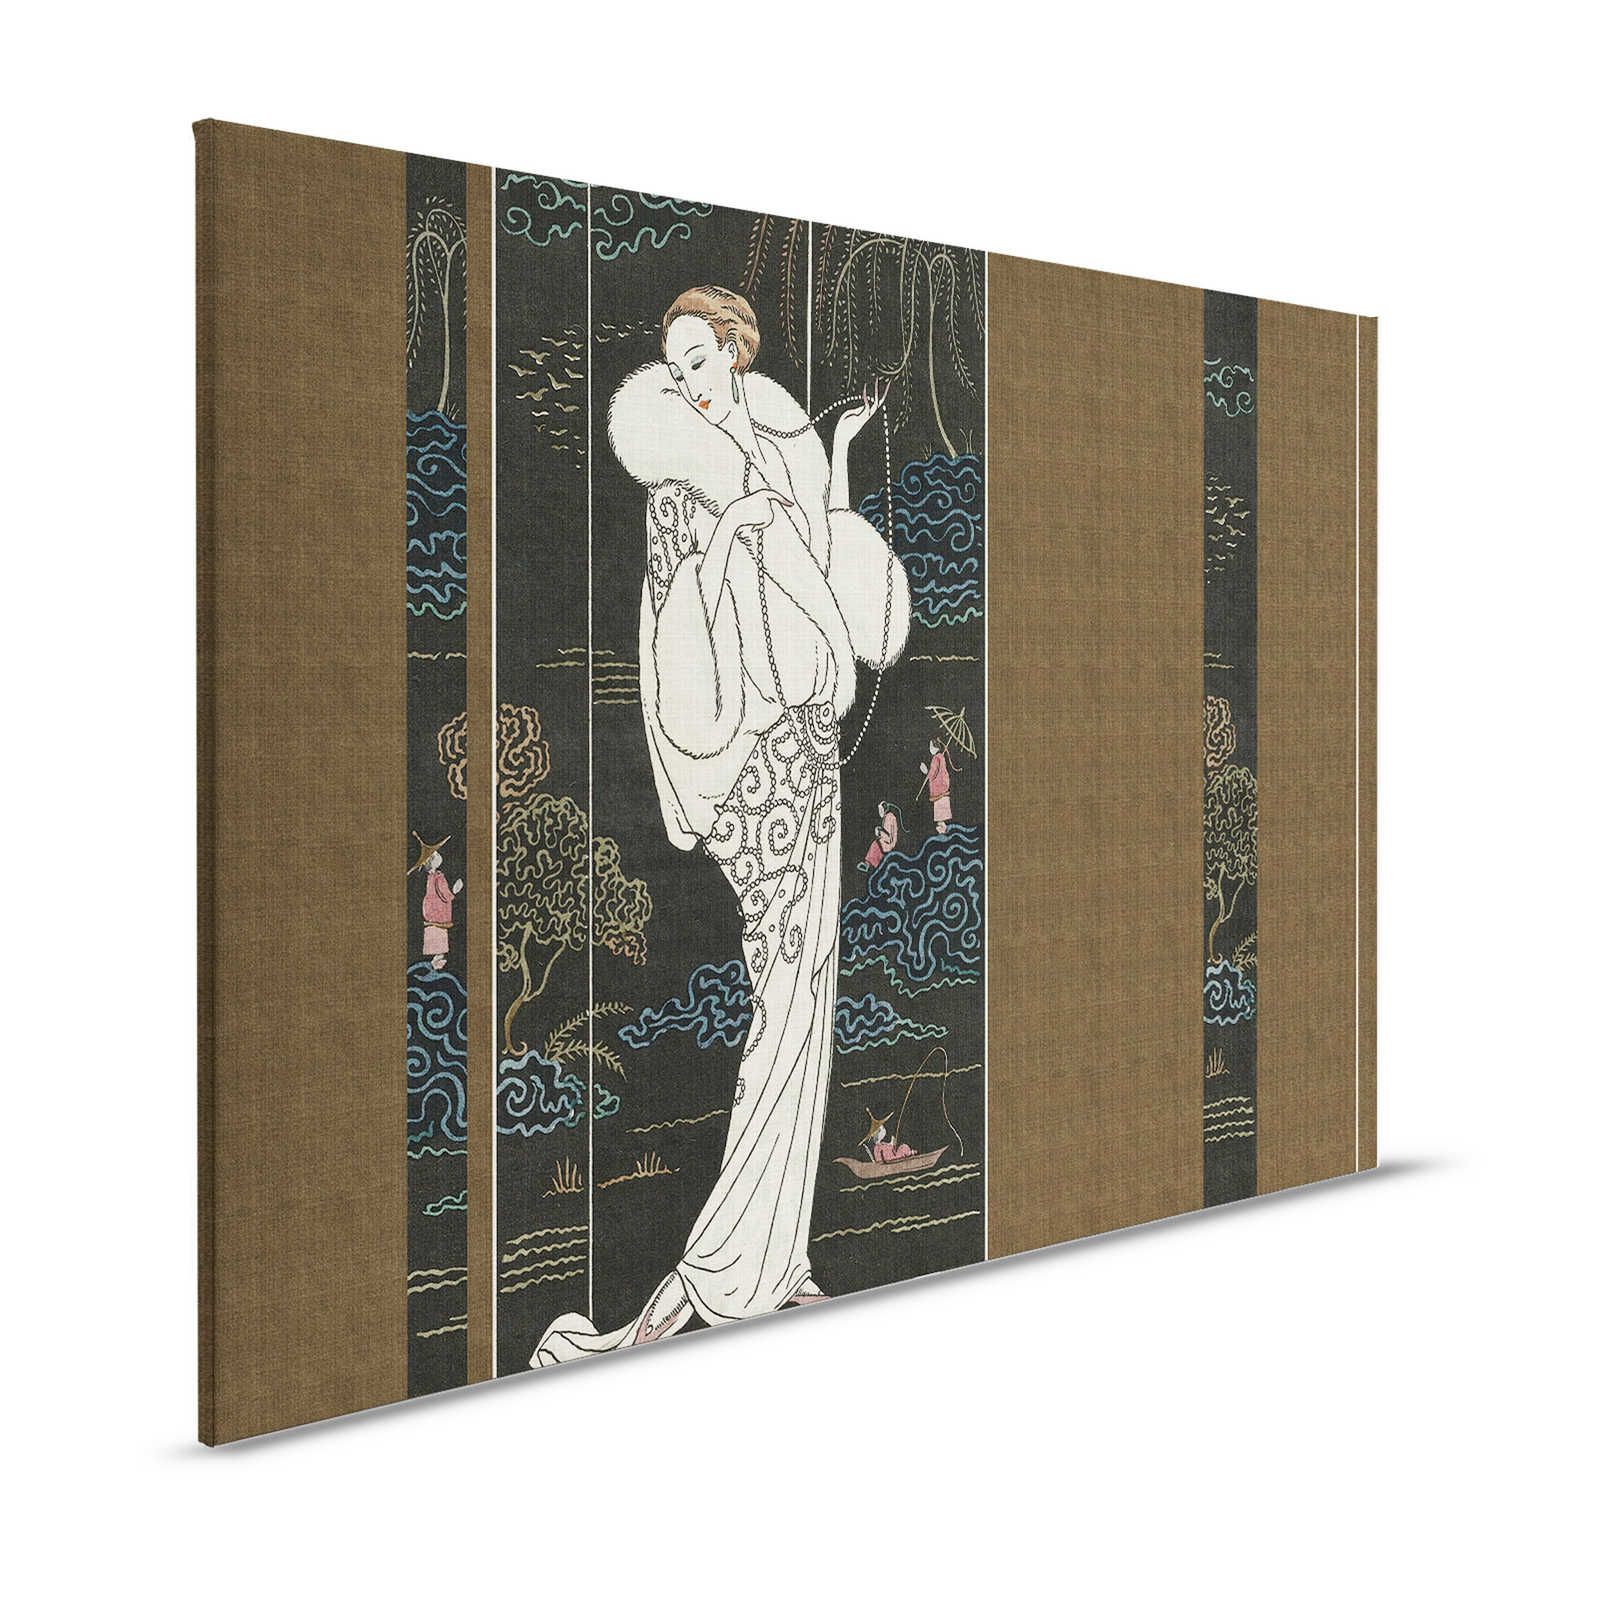 Adlon 4 - Cuadro en lienzo Negro-Marrón Diseño retro asiático - 1,20 m x 0,80 m
